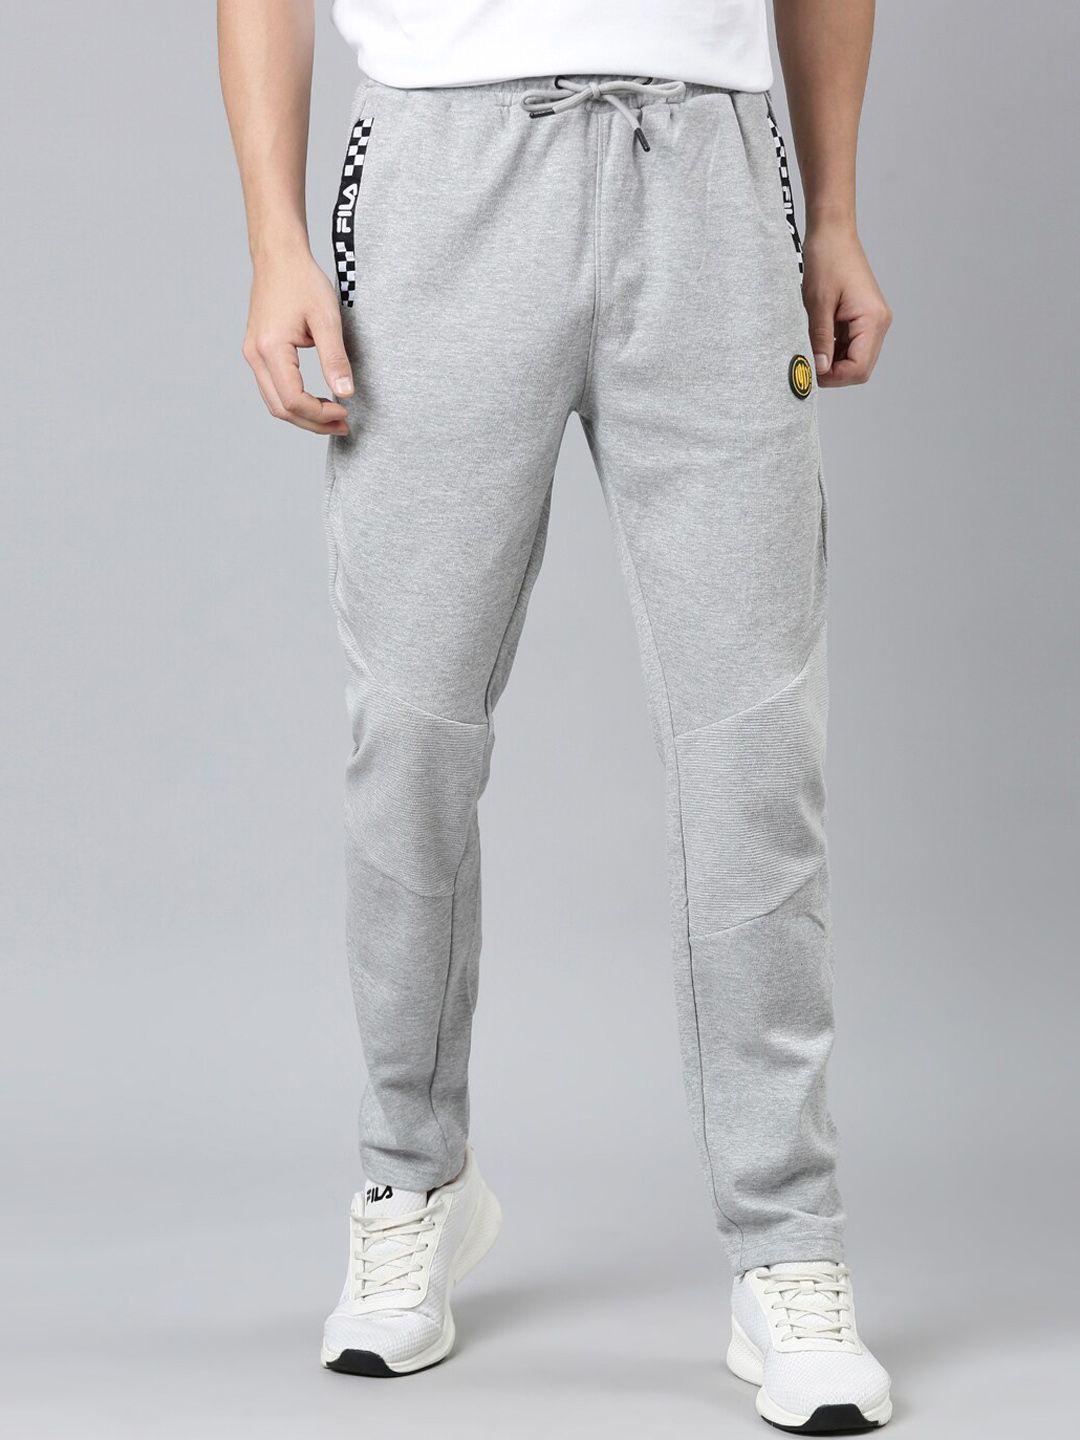 fila-men-excellent-comfort-natural-softness-mid-rise-cotton-sports-track-pants